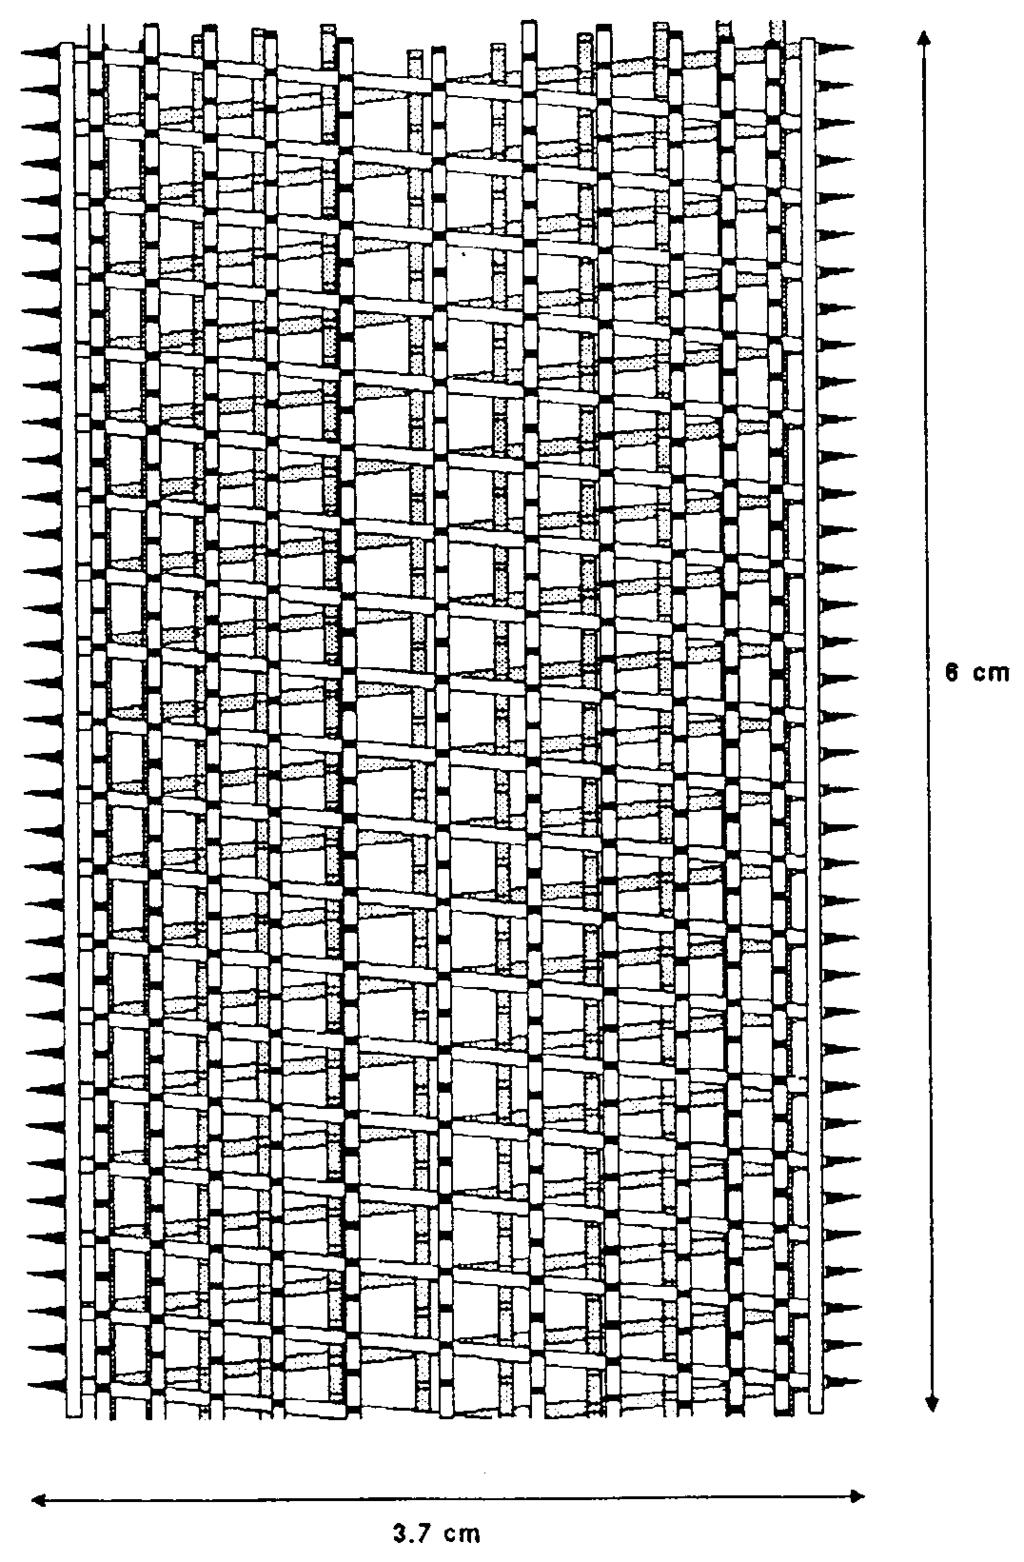 Figur 2: Hair curler - The curler is a cylindrical lattice with fine spikes